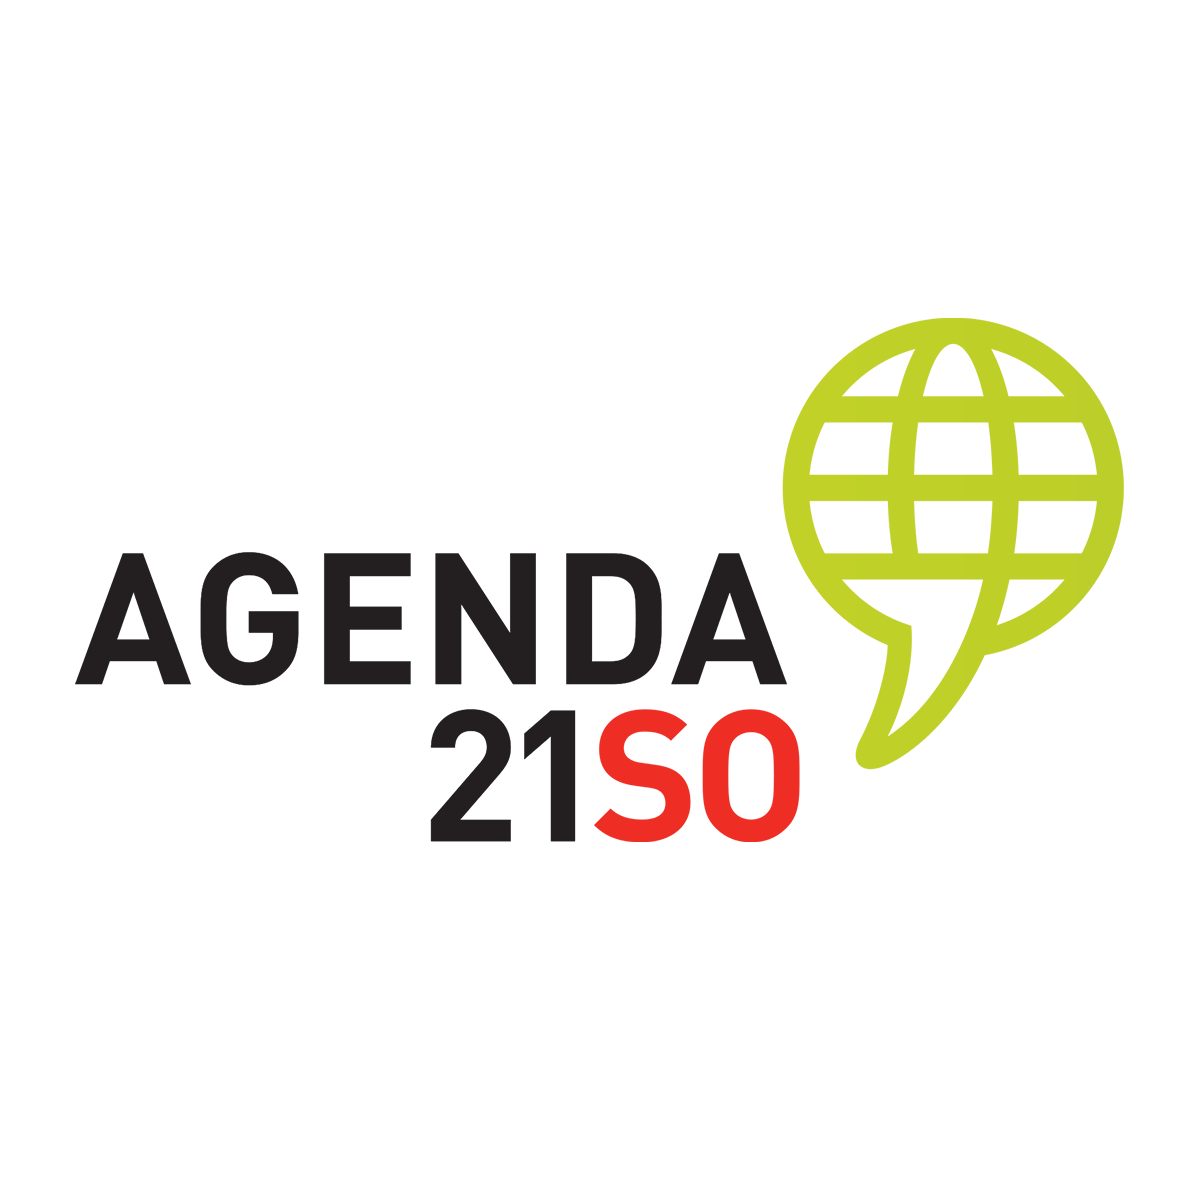 jal_pf_agenda21_logo_1200x1200